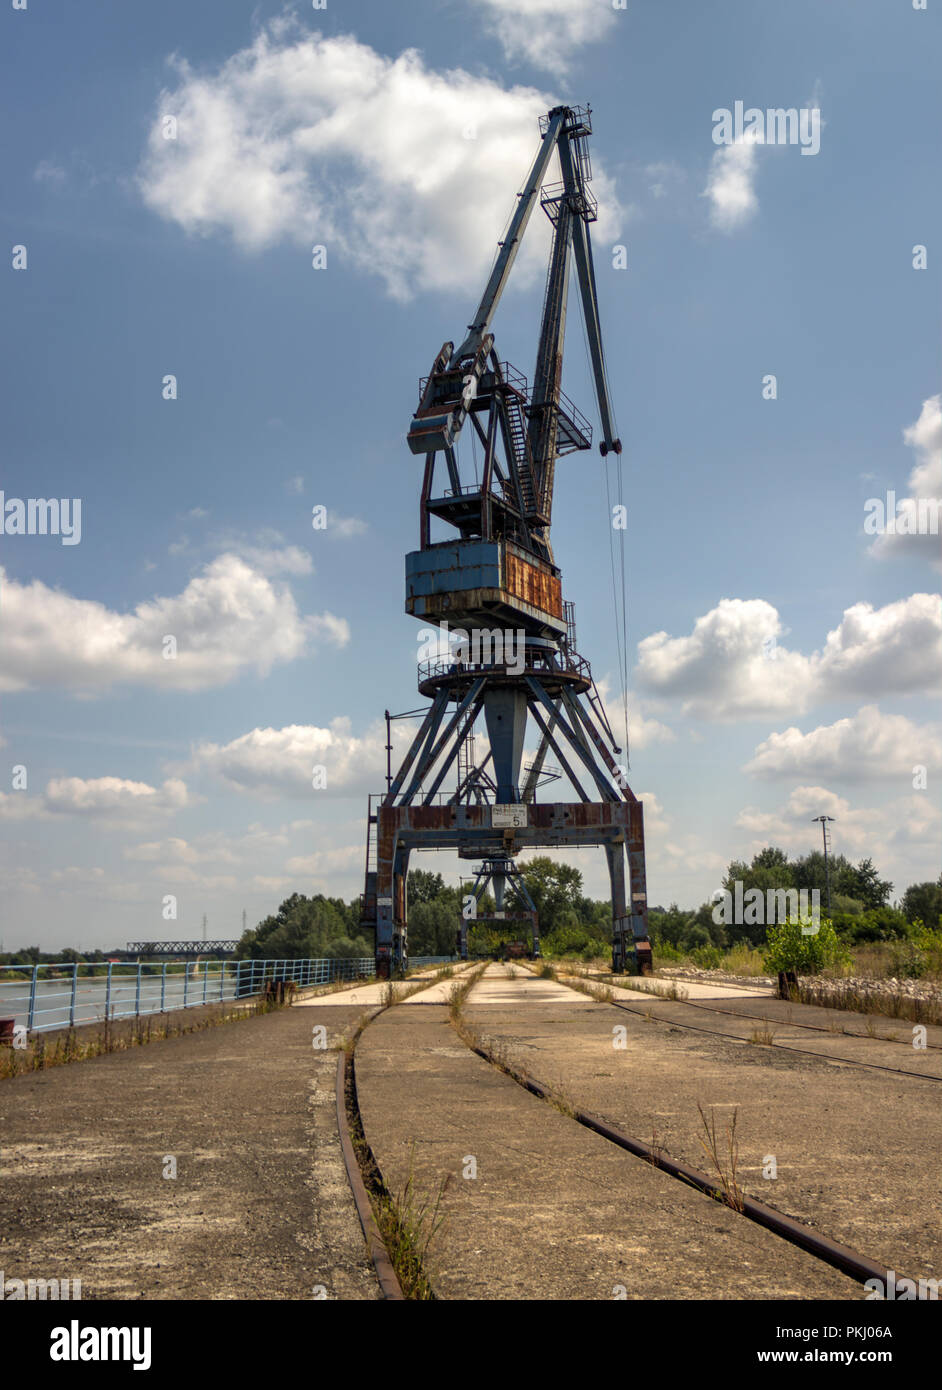 Bosnia and Herzegovina - Dock cranes in the Port of Samac on the Sava River  Stock Photo - Alamy